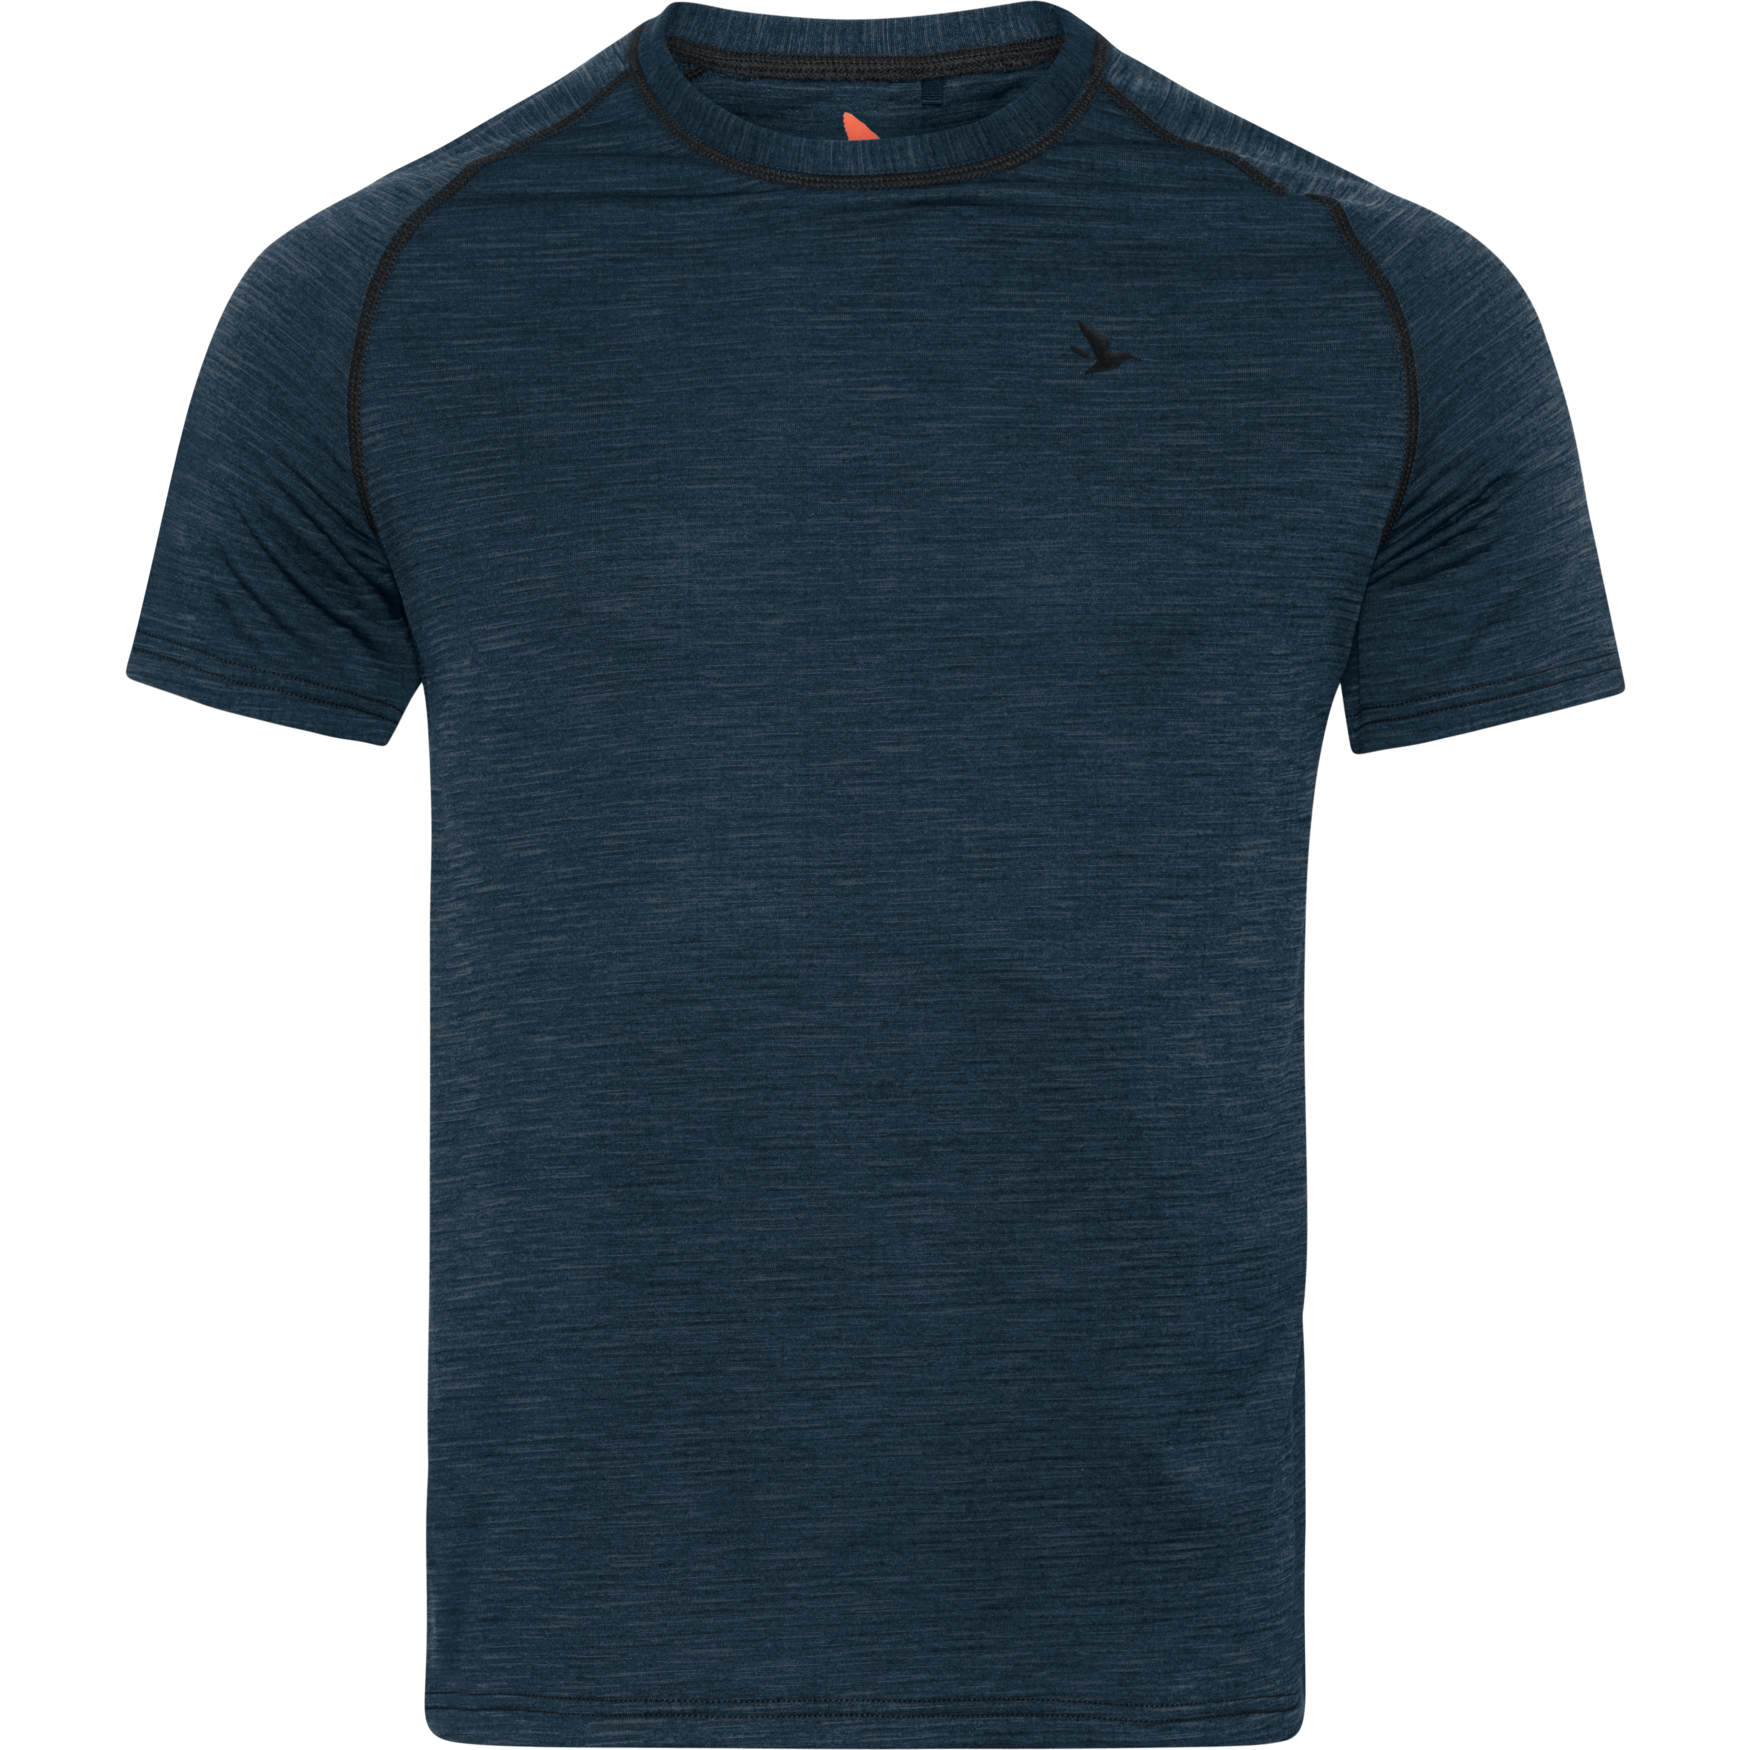 Seeland Active S/S T-Shirt Royal Blue Short Sleeve Tshirt